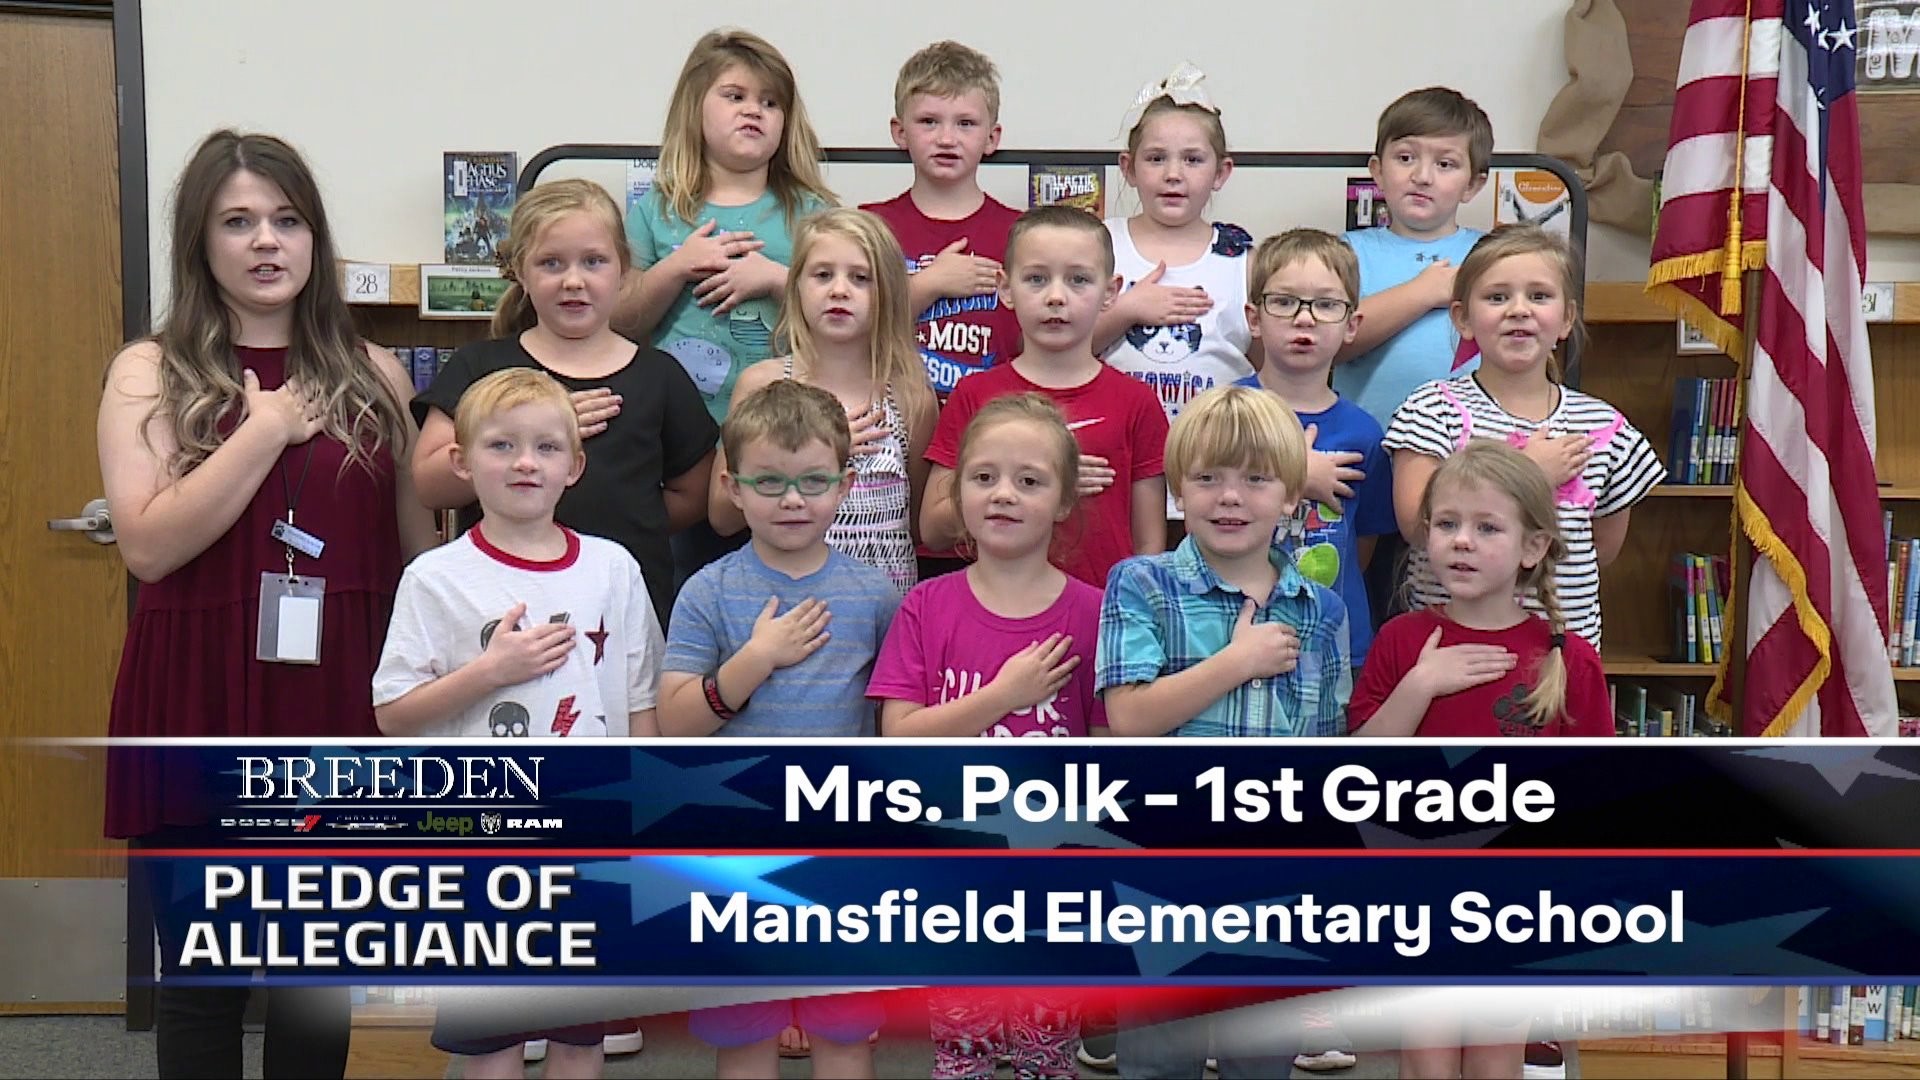 Mrs. Polk 1st Grade Mansfield Elementary School